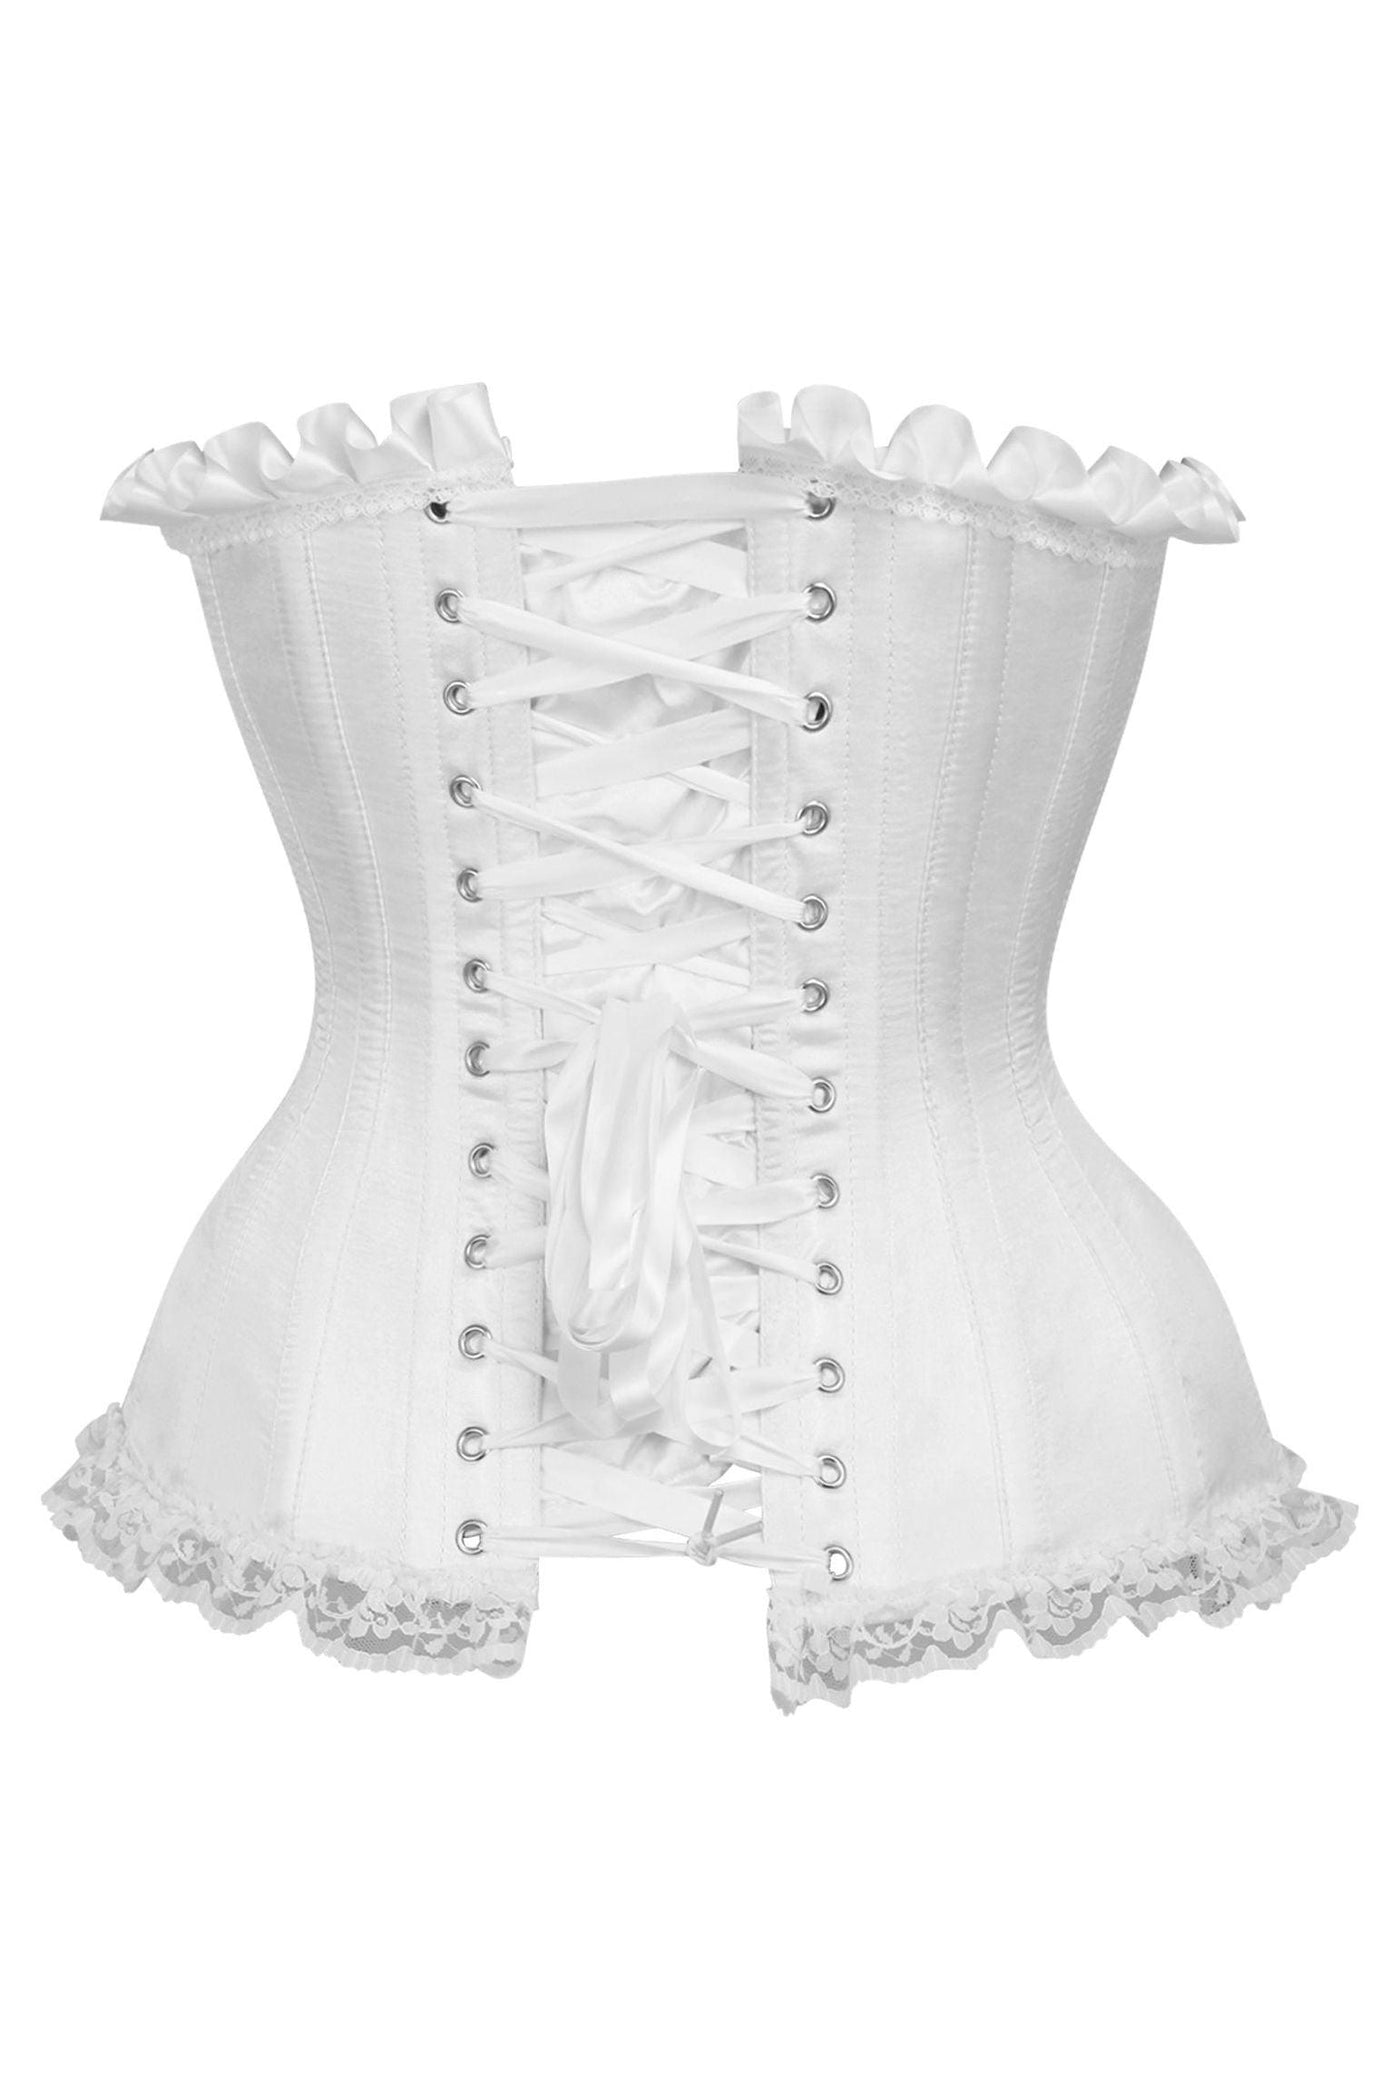 Daisy Corsets Top Drawer White Satin Steel Boned Burlesque Corset –  AMIClubwear